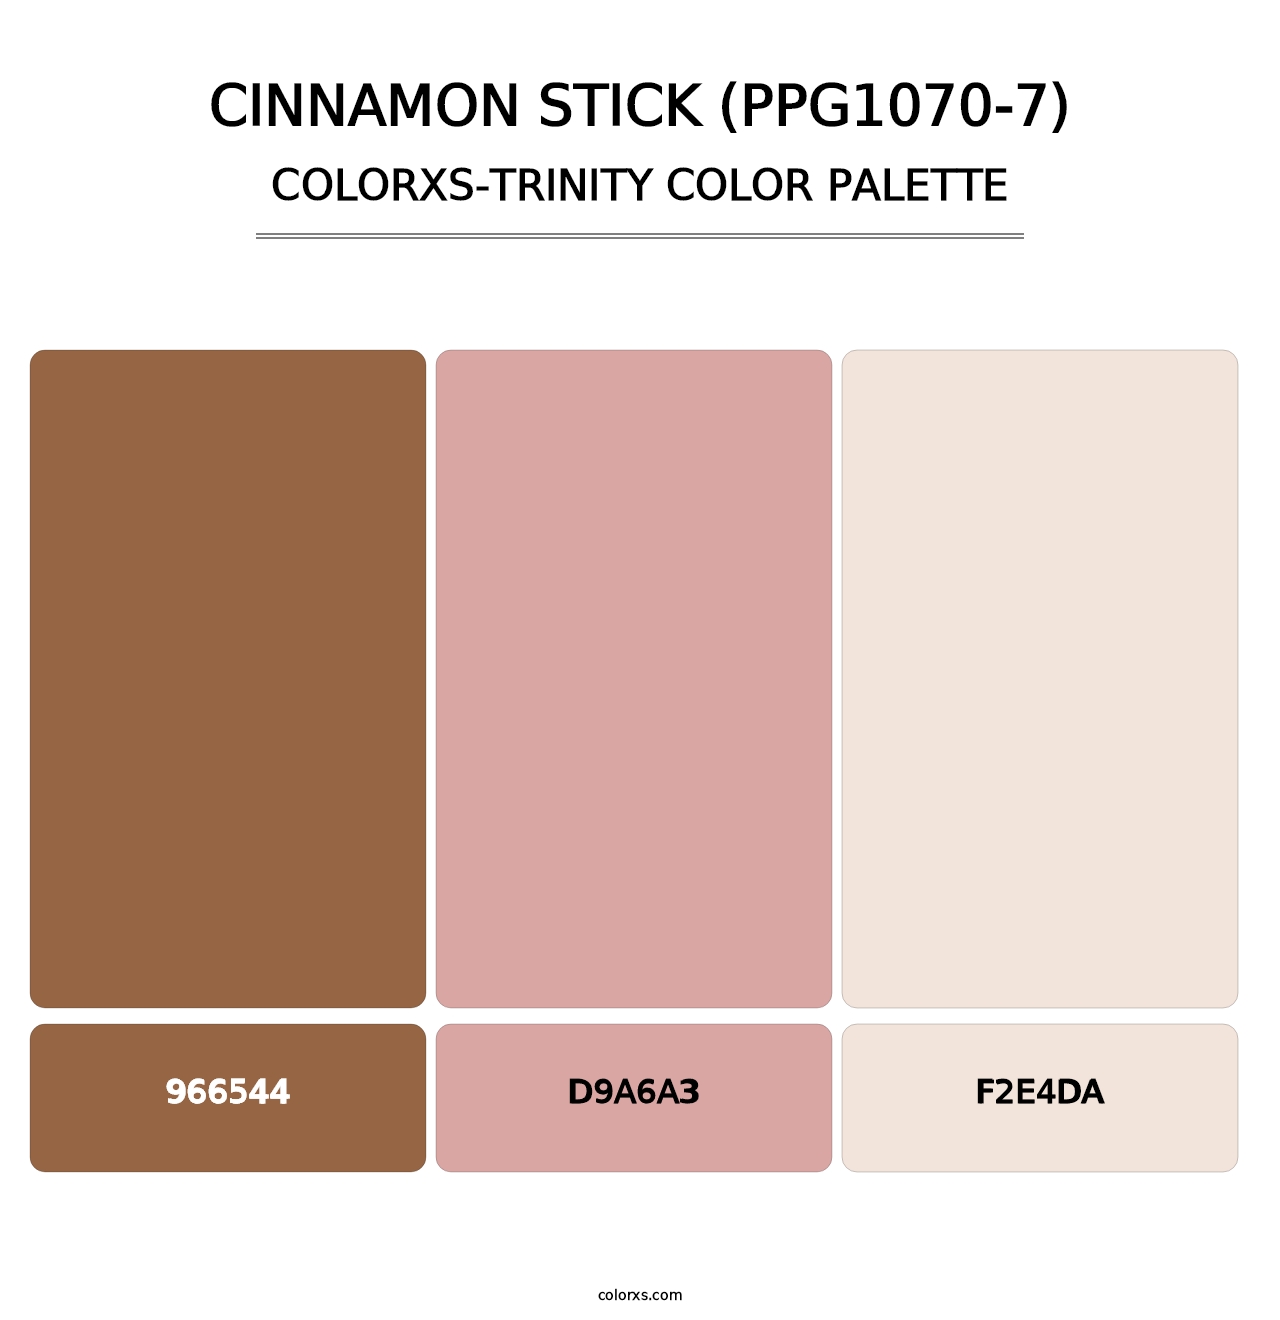 Cinnamon Stick (PPG1070-7) - Colorxs Trinity Palette